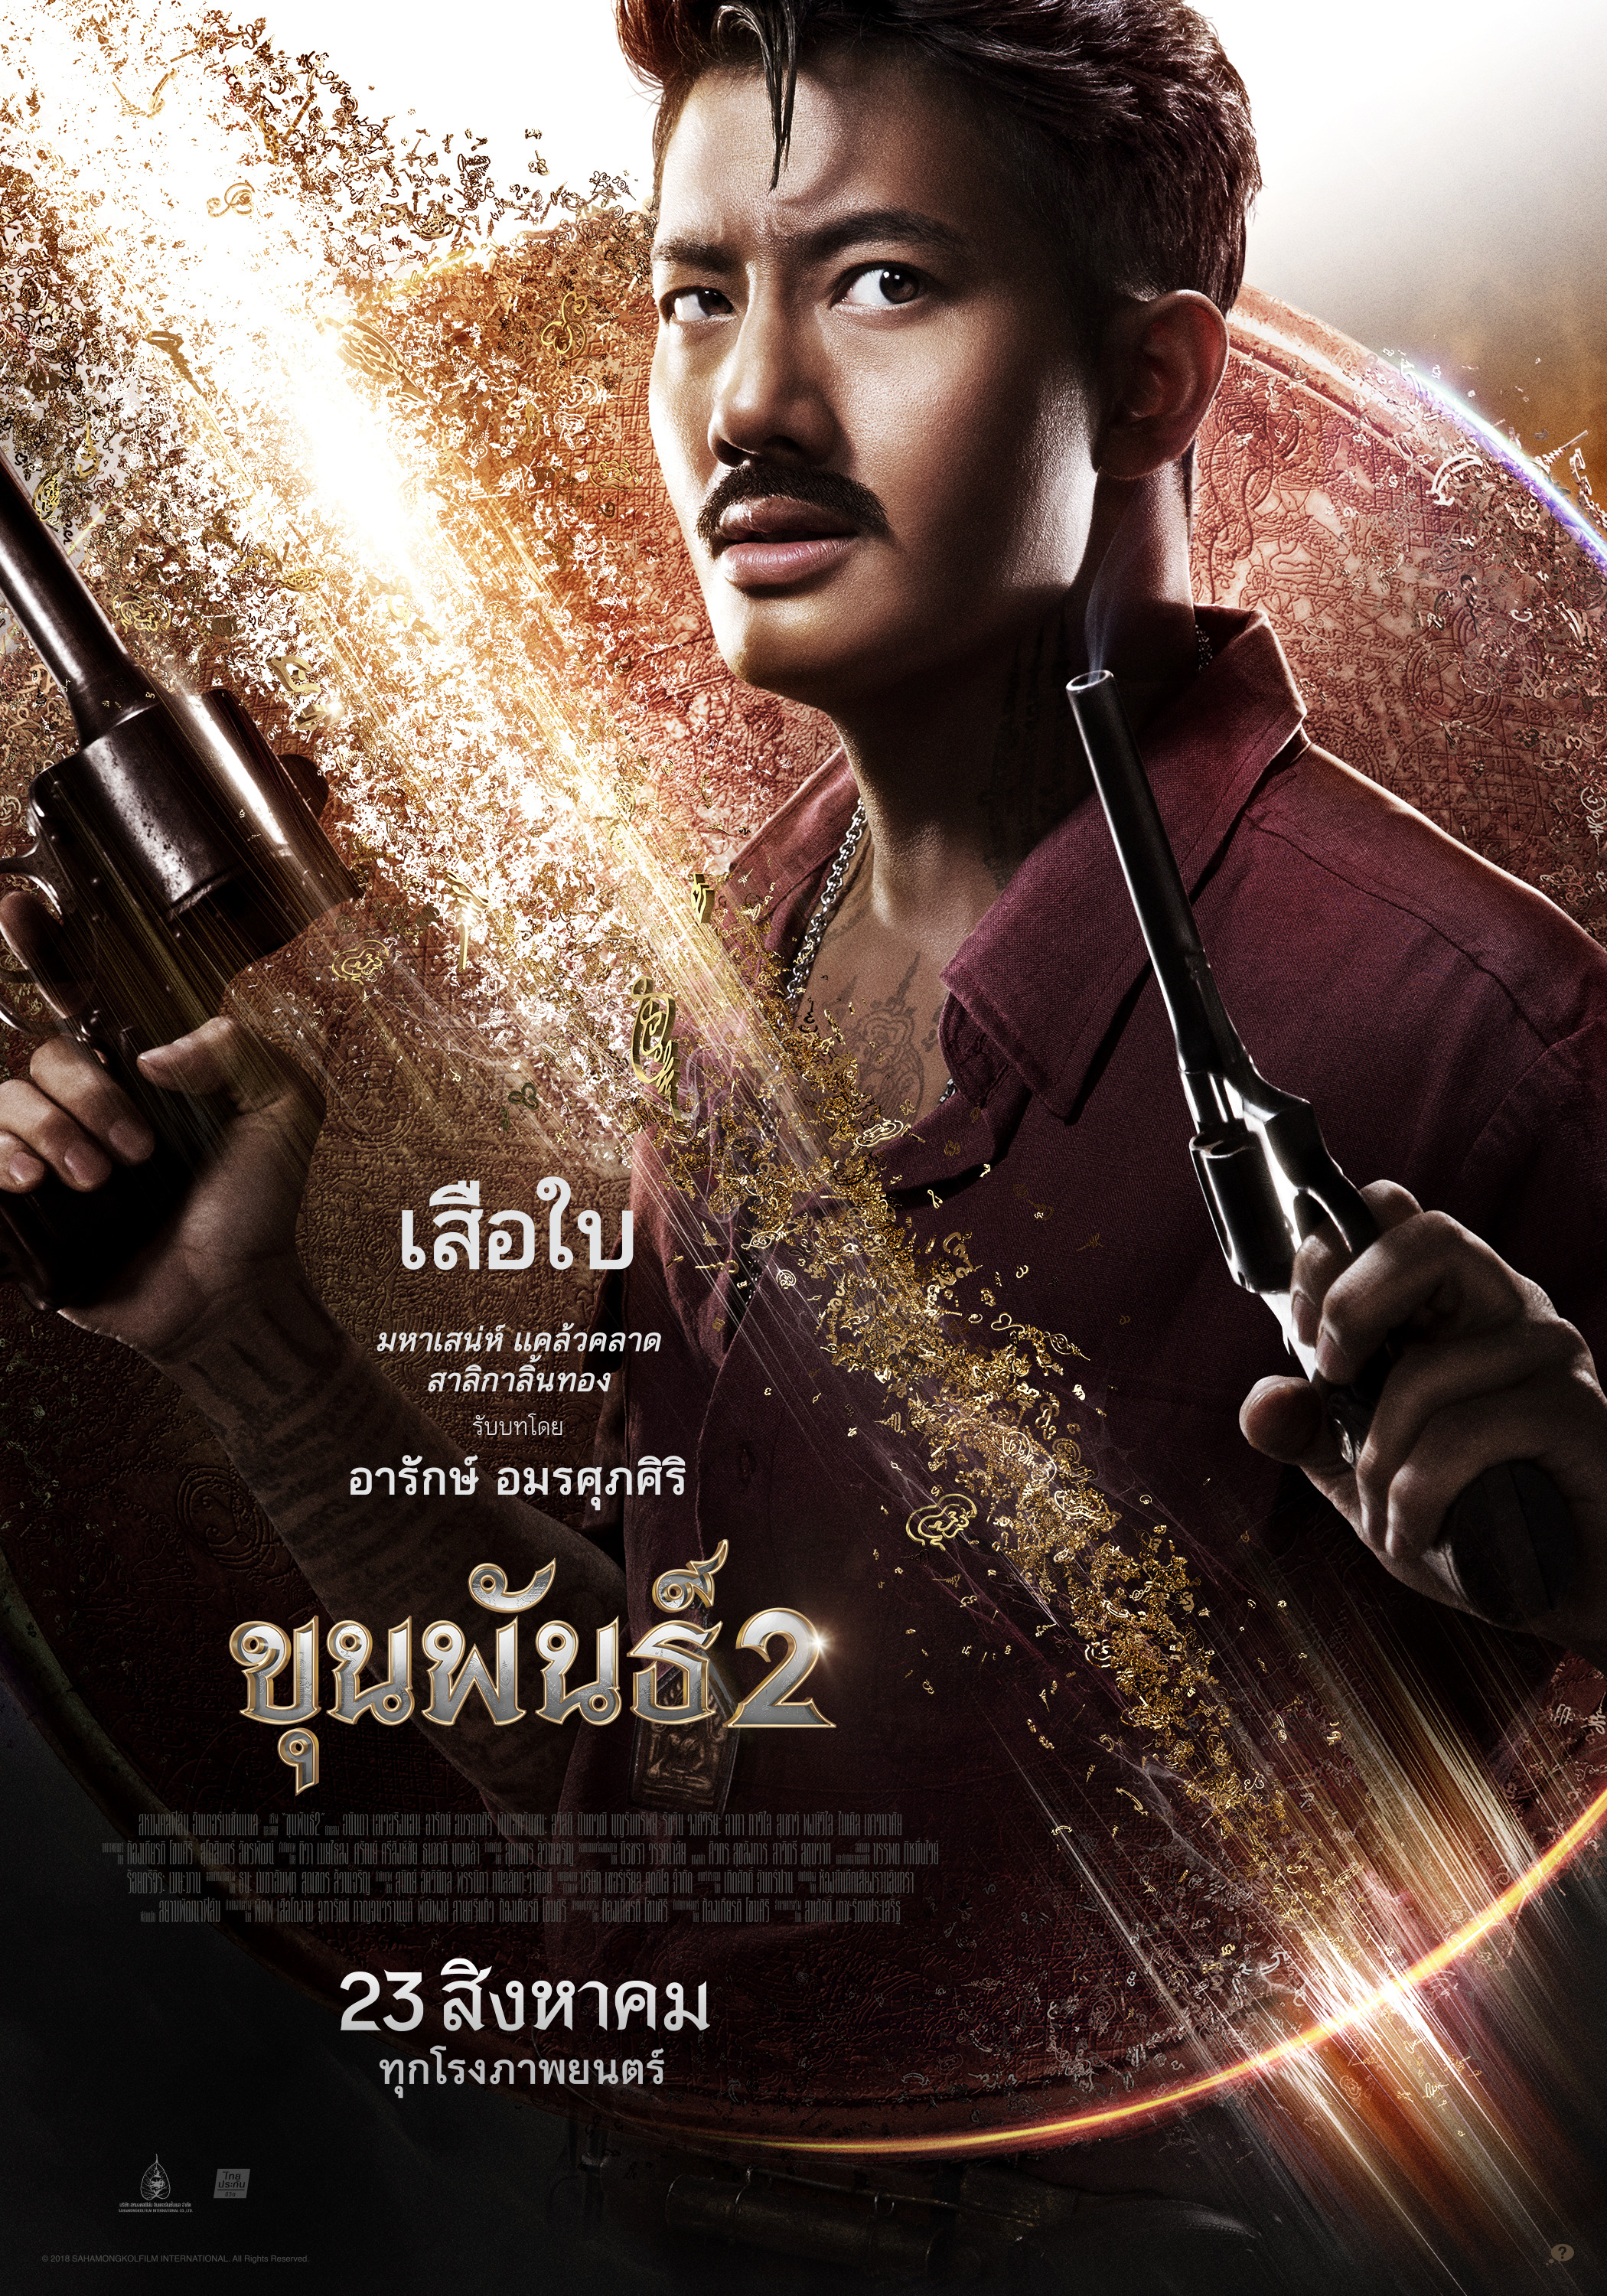 Mega Sized Movie Poster Image for Khun Phan 2 (#7 of 8)